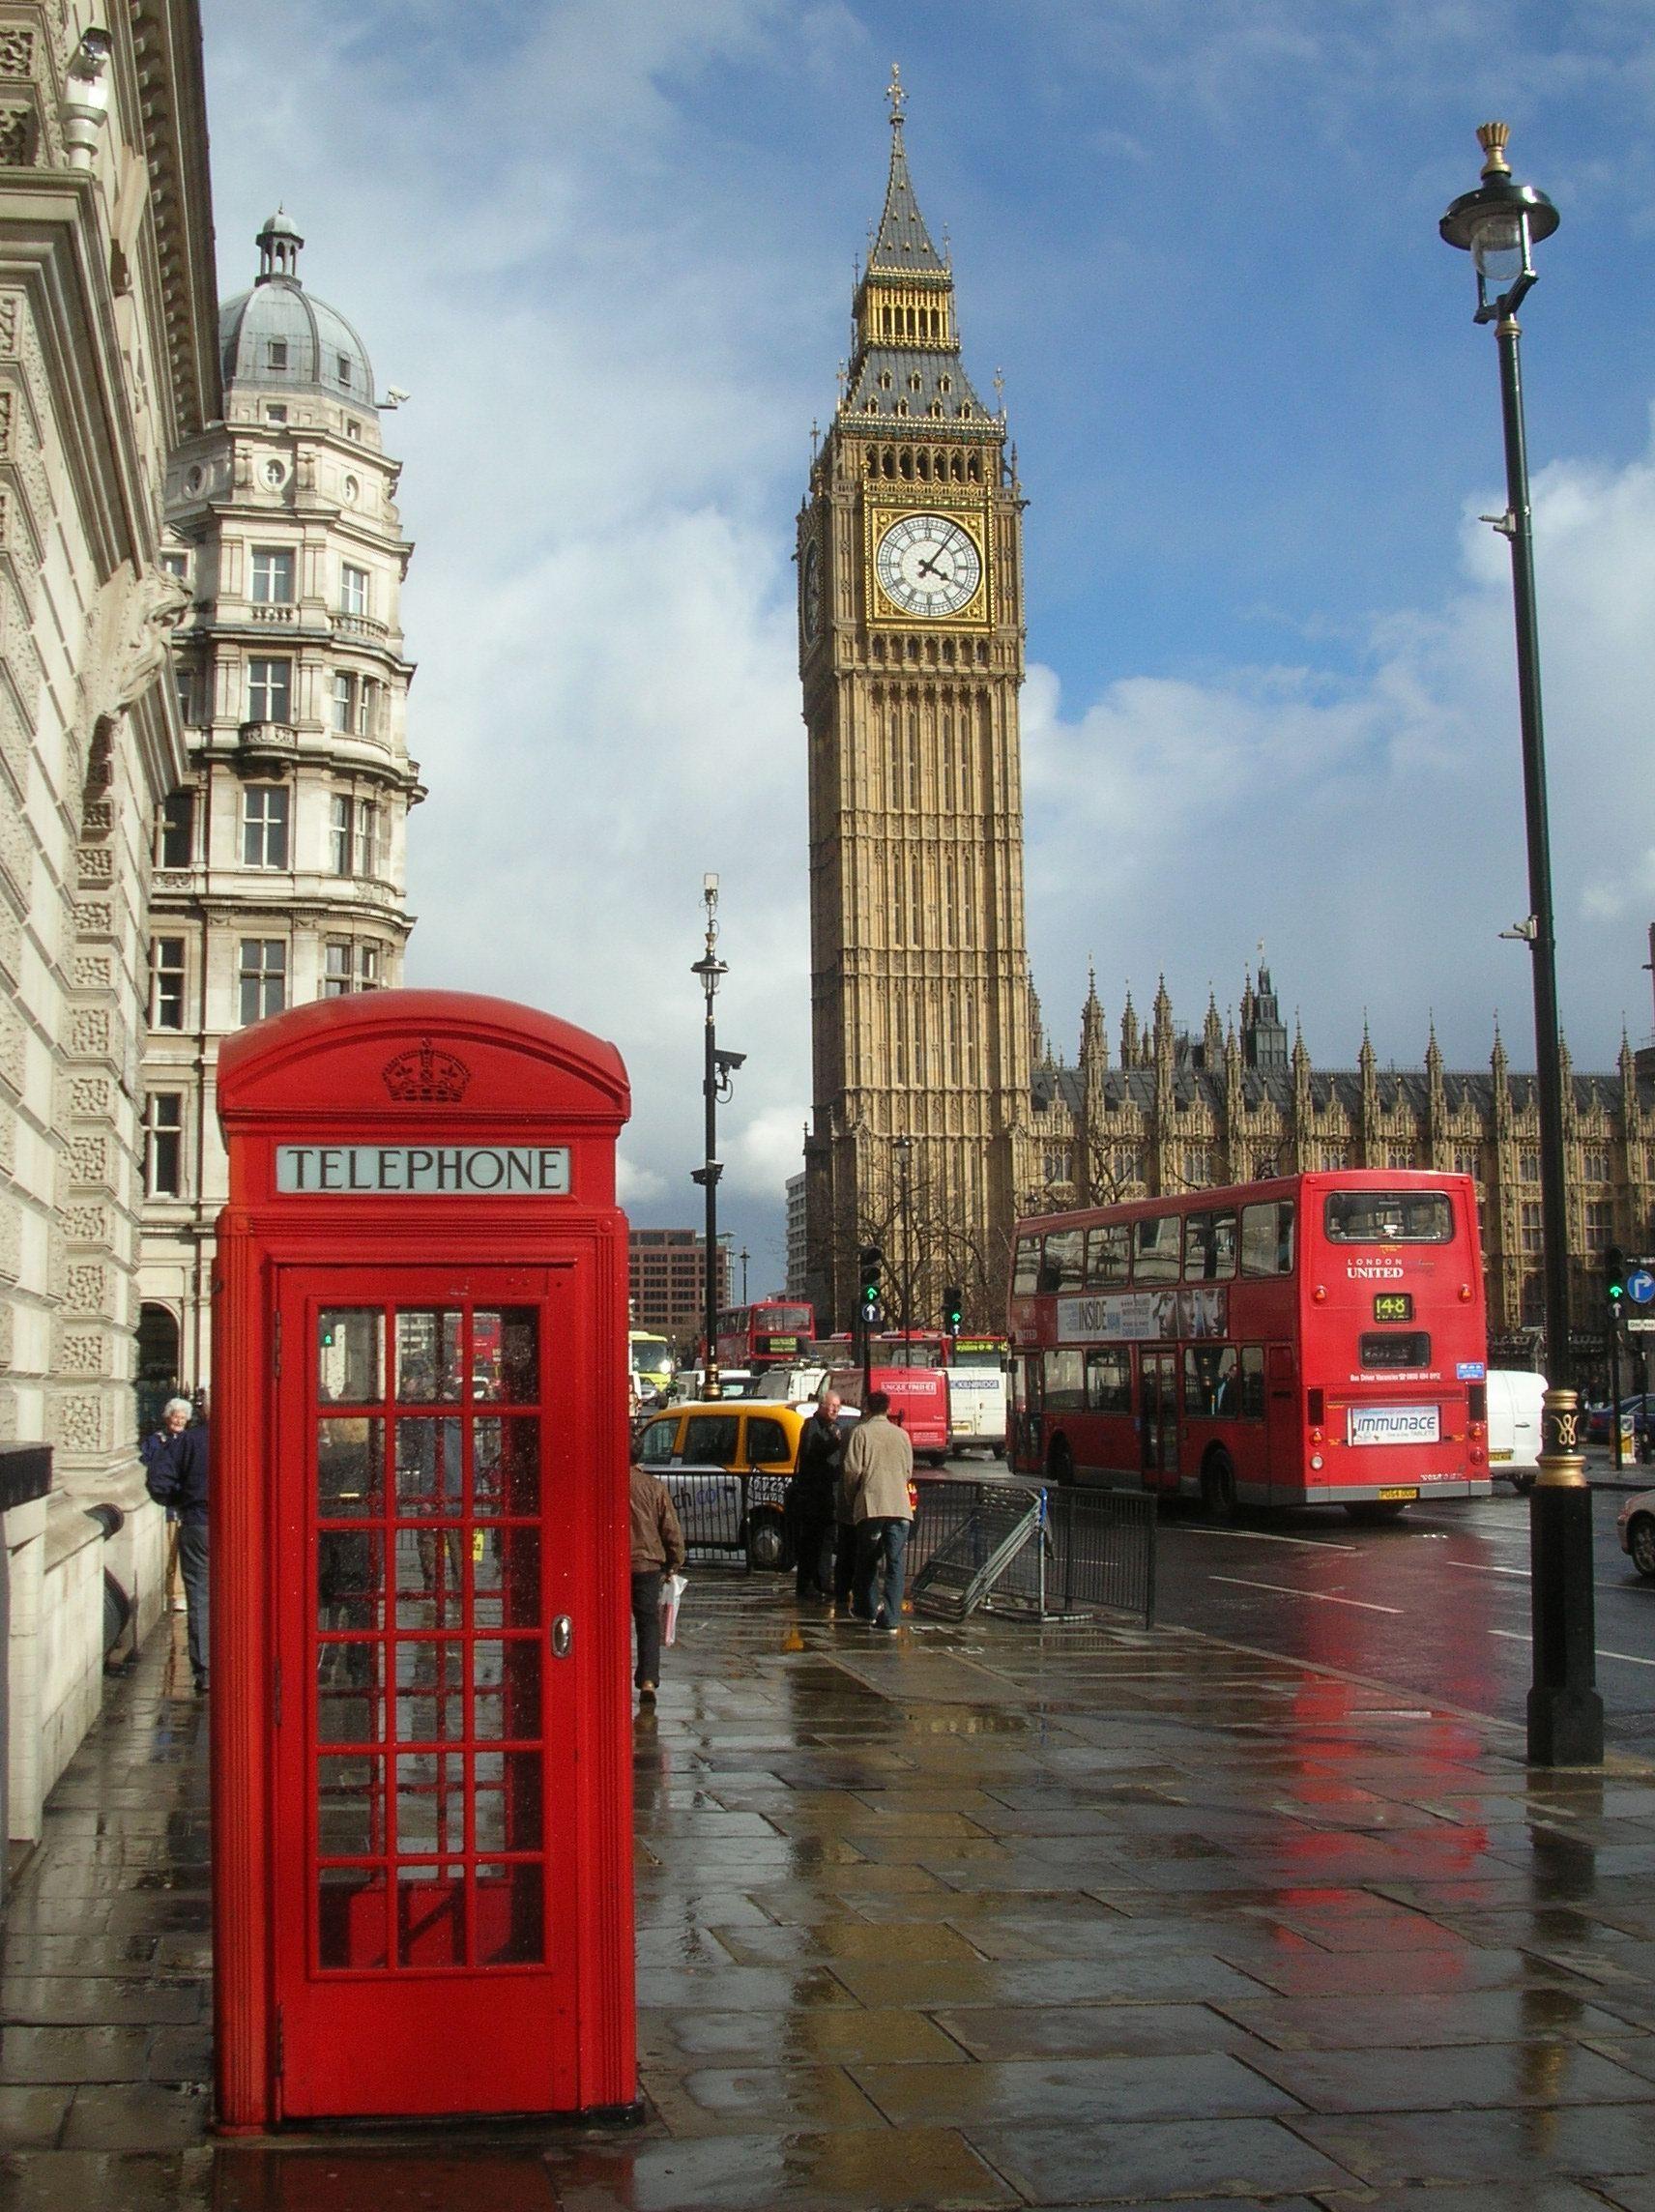 London Big Ben Phone box. European cities wallpaper. More